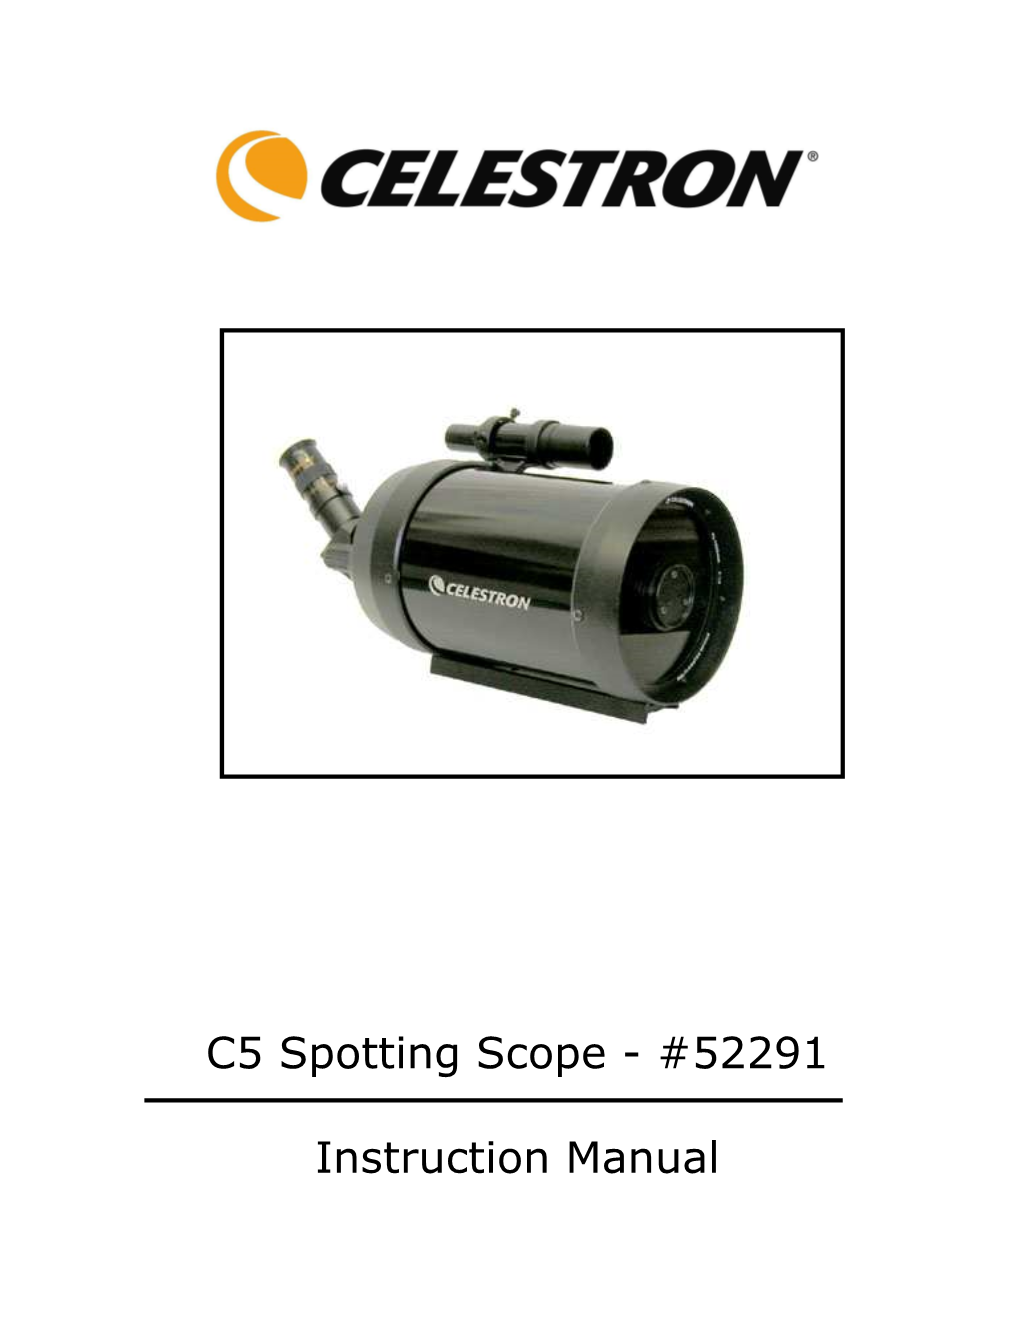 C5 Spotting Scope XLT 52291